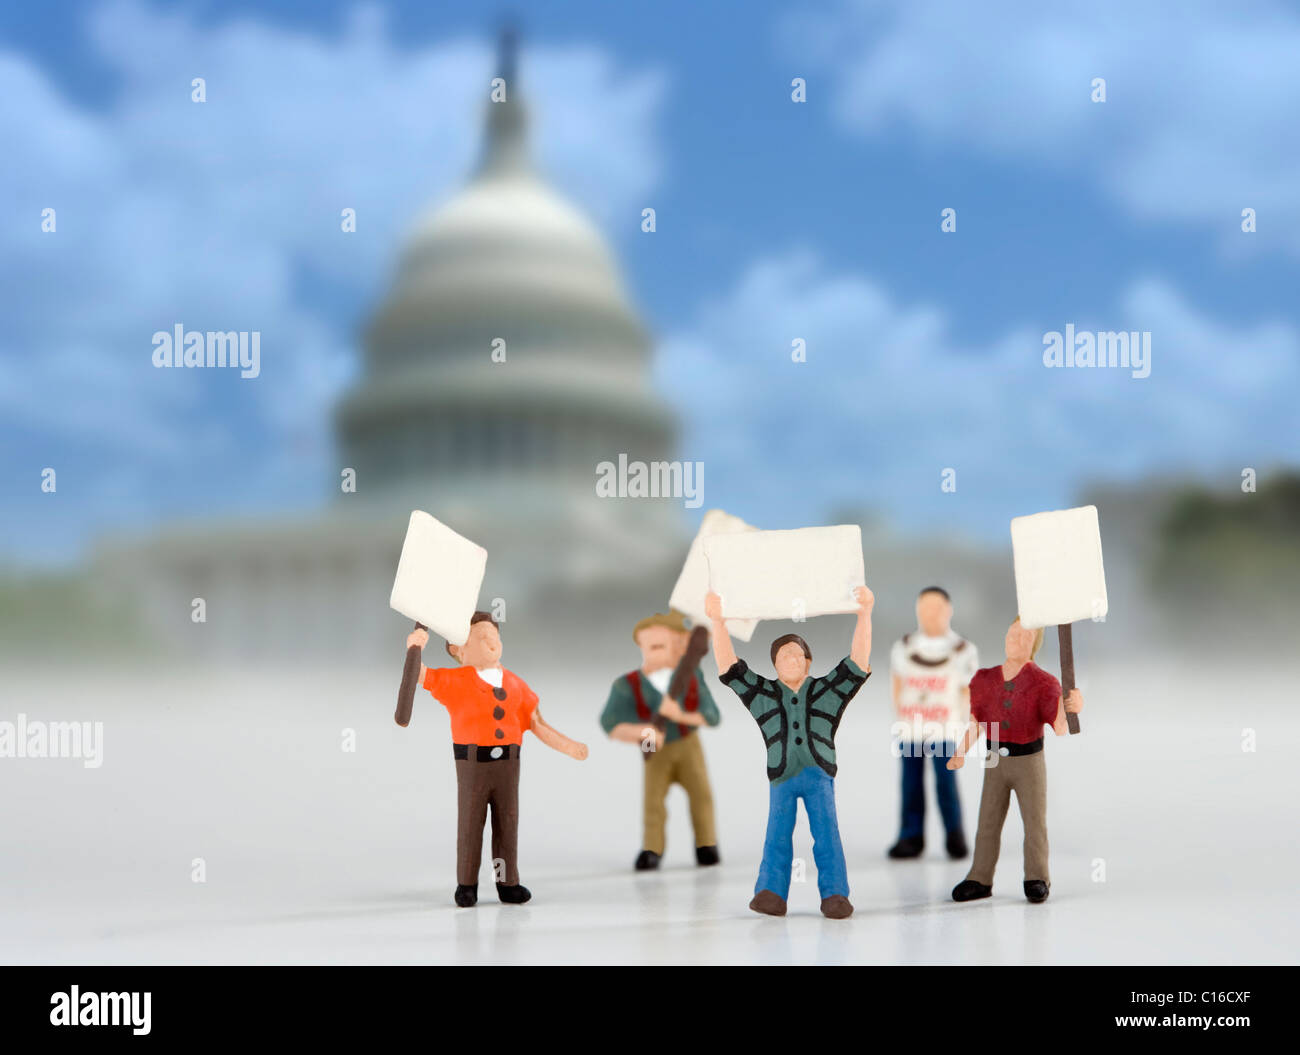 Demonstranten auf das Capital Building-Konzept-Bild. Modell Figuren Demonstranten in Washington. Stockfoto